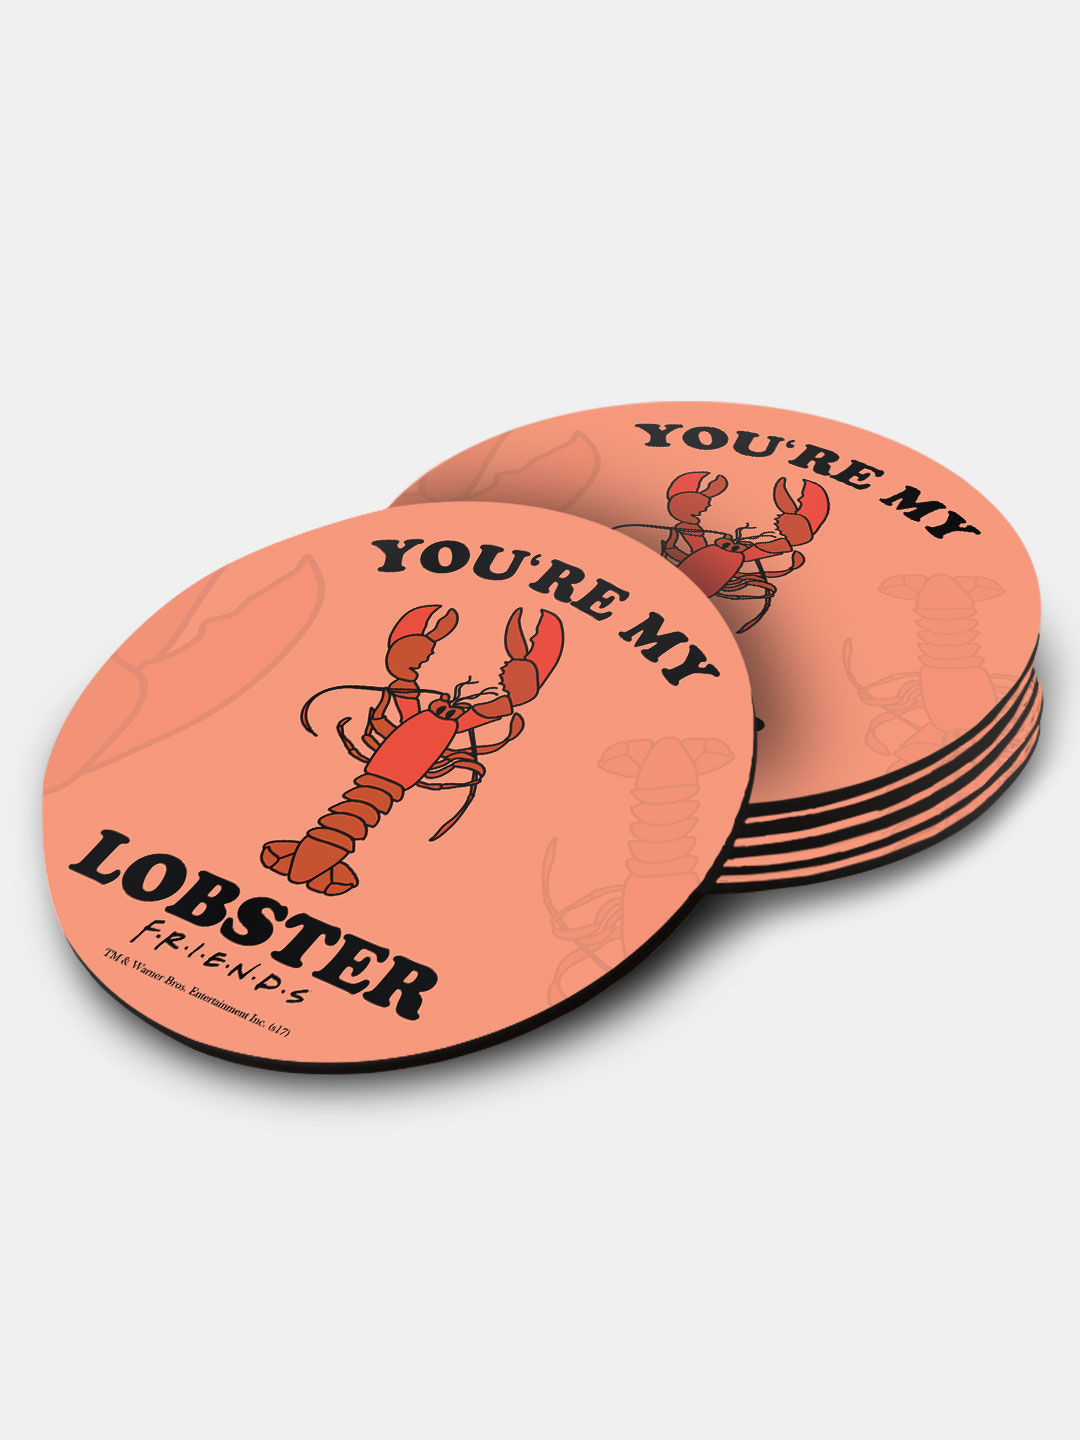 Buy Valentine Lobster - Circular Coasters Coasters Online